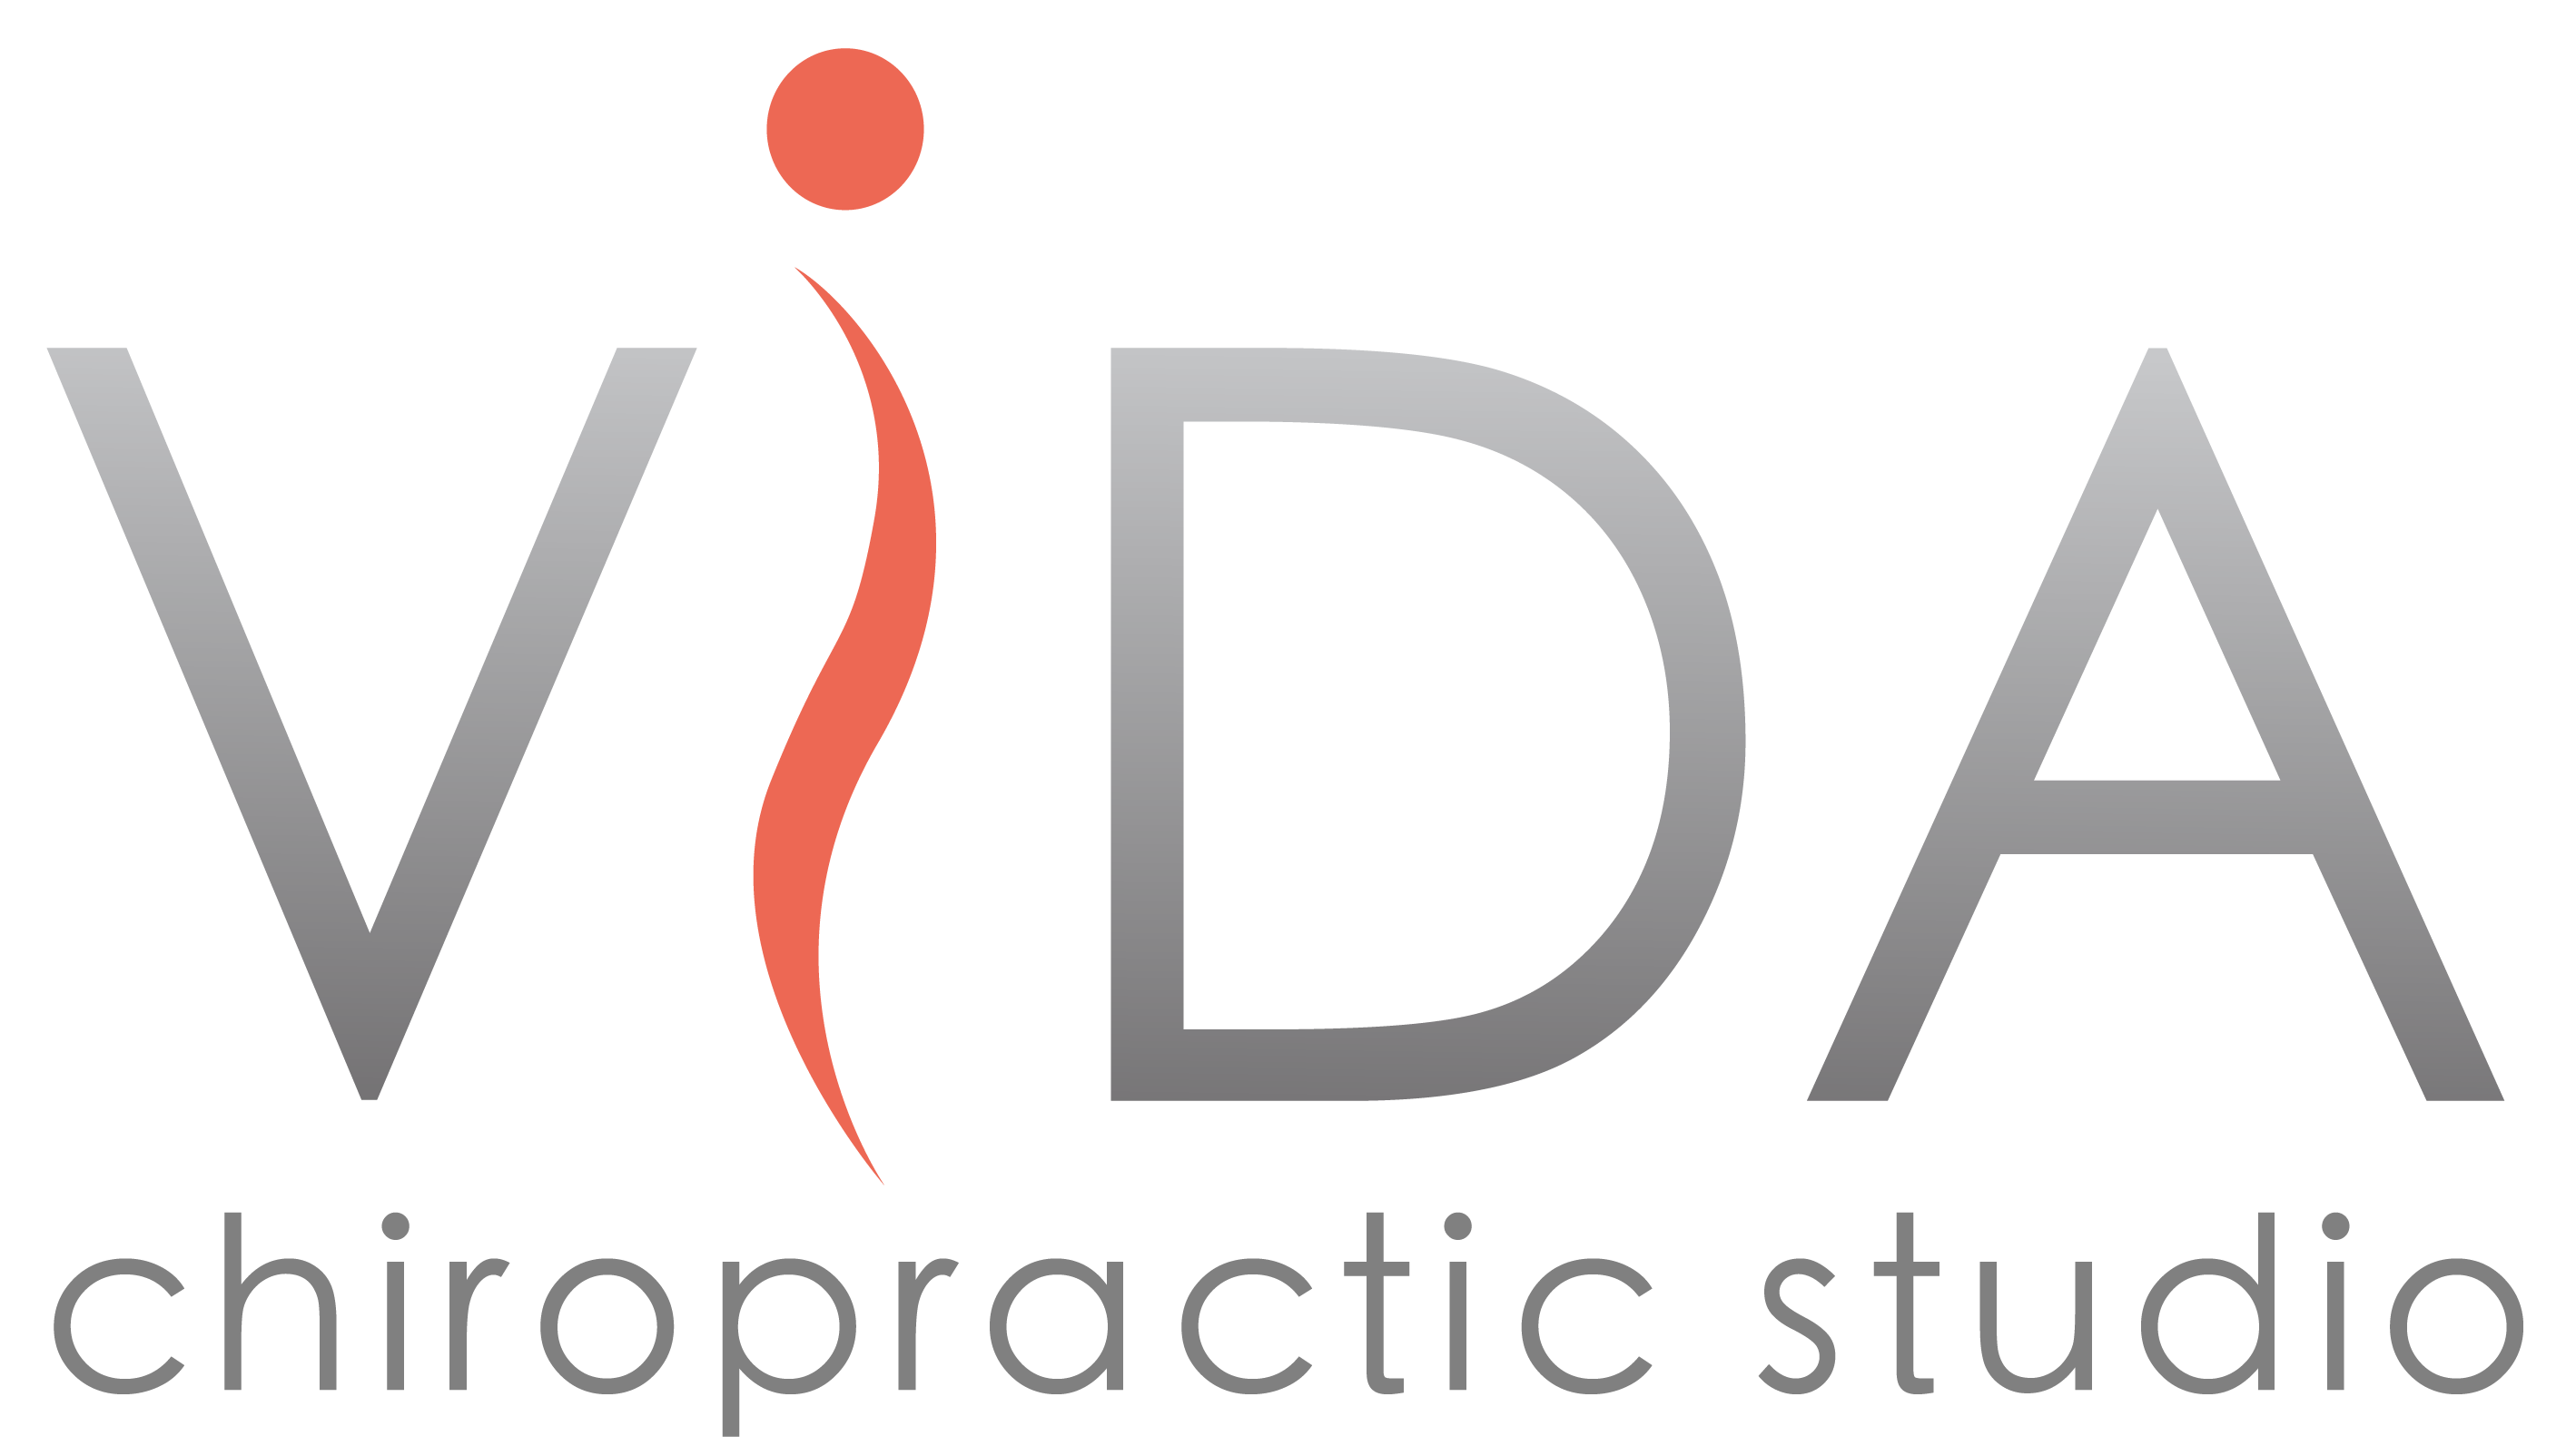 vida chiropractic studio logo e1700589444528